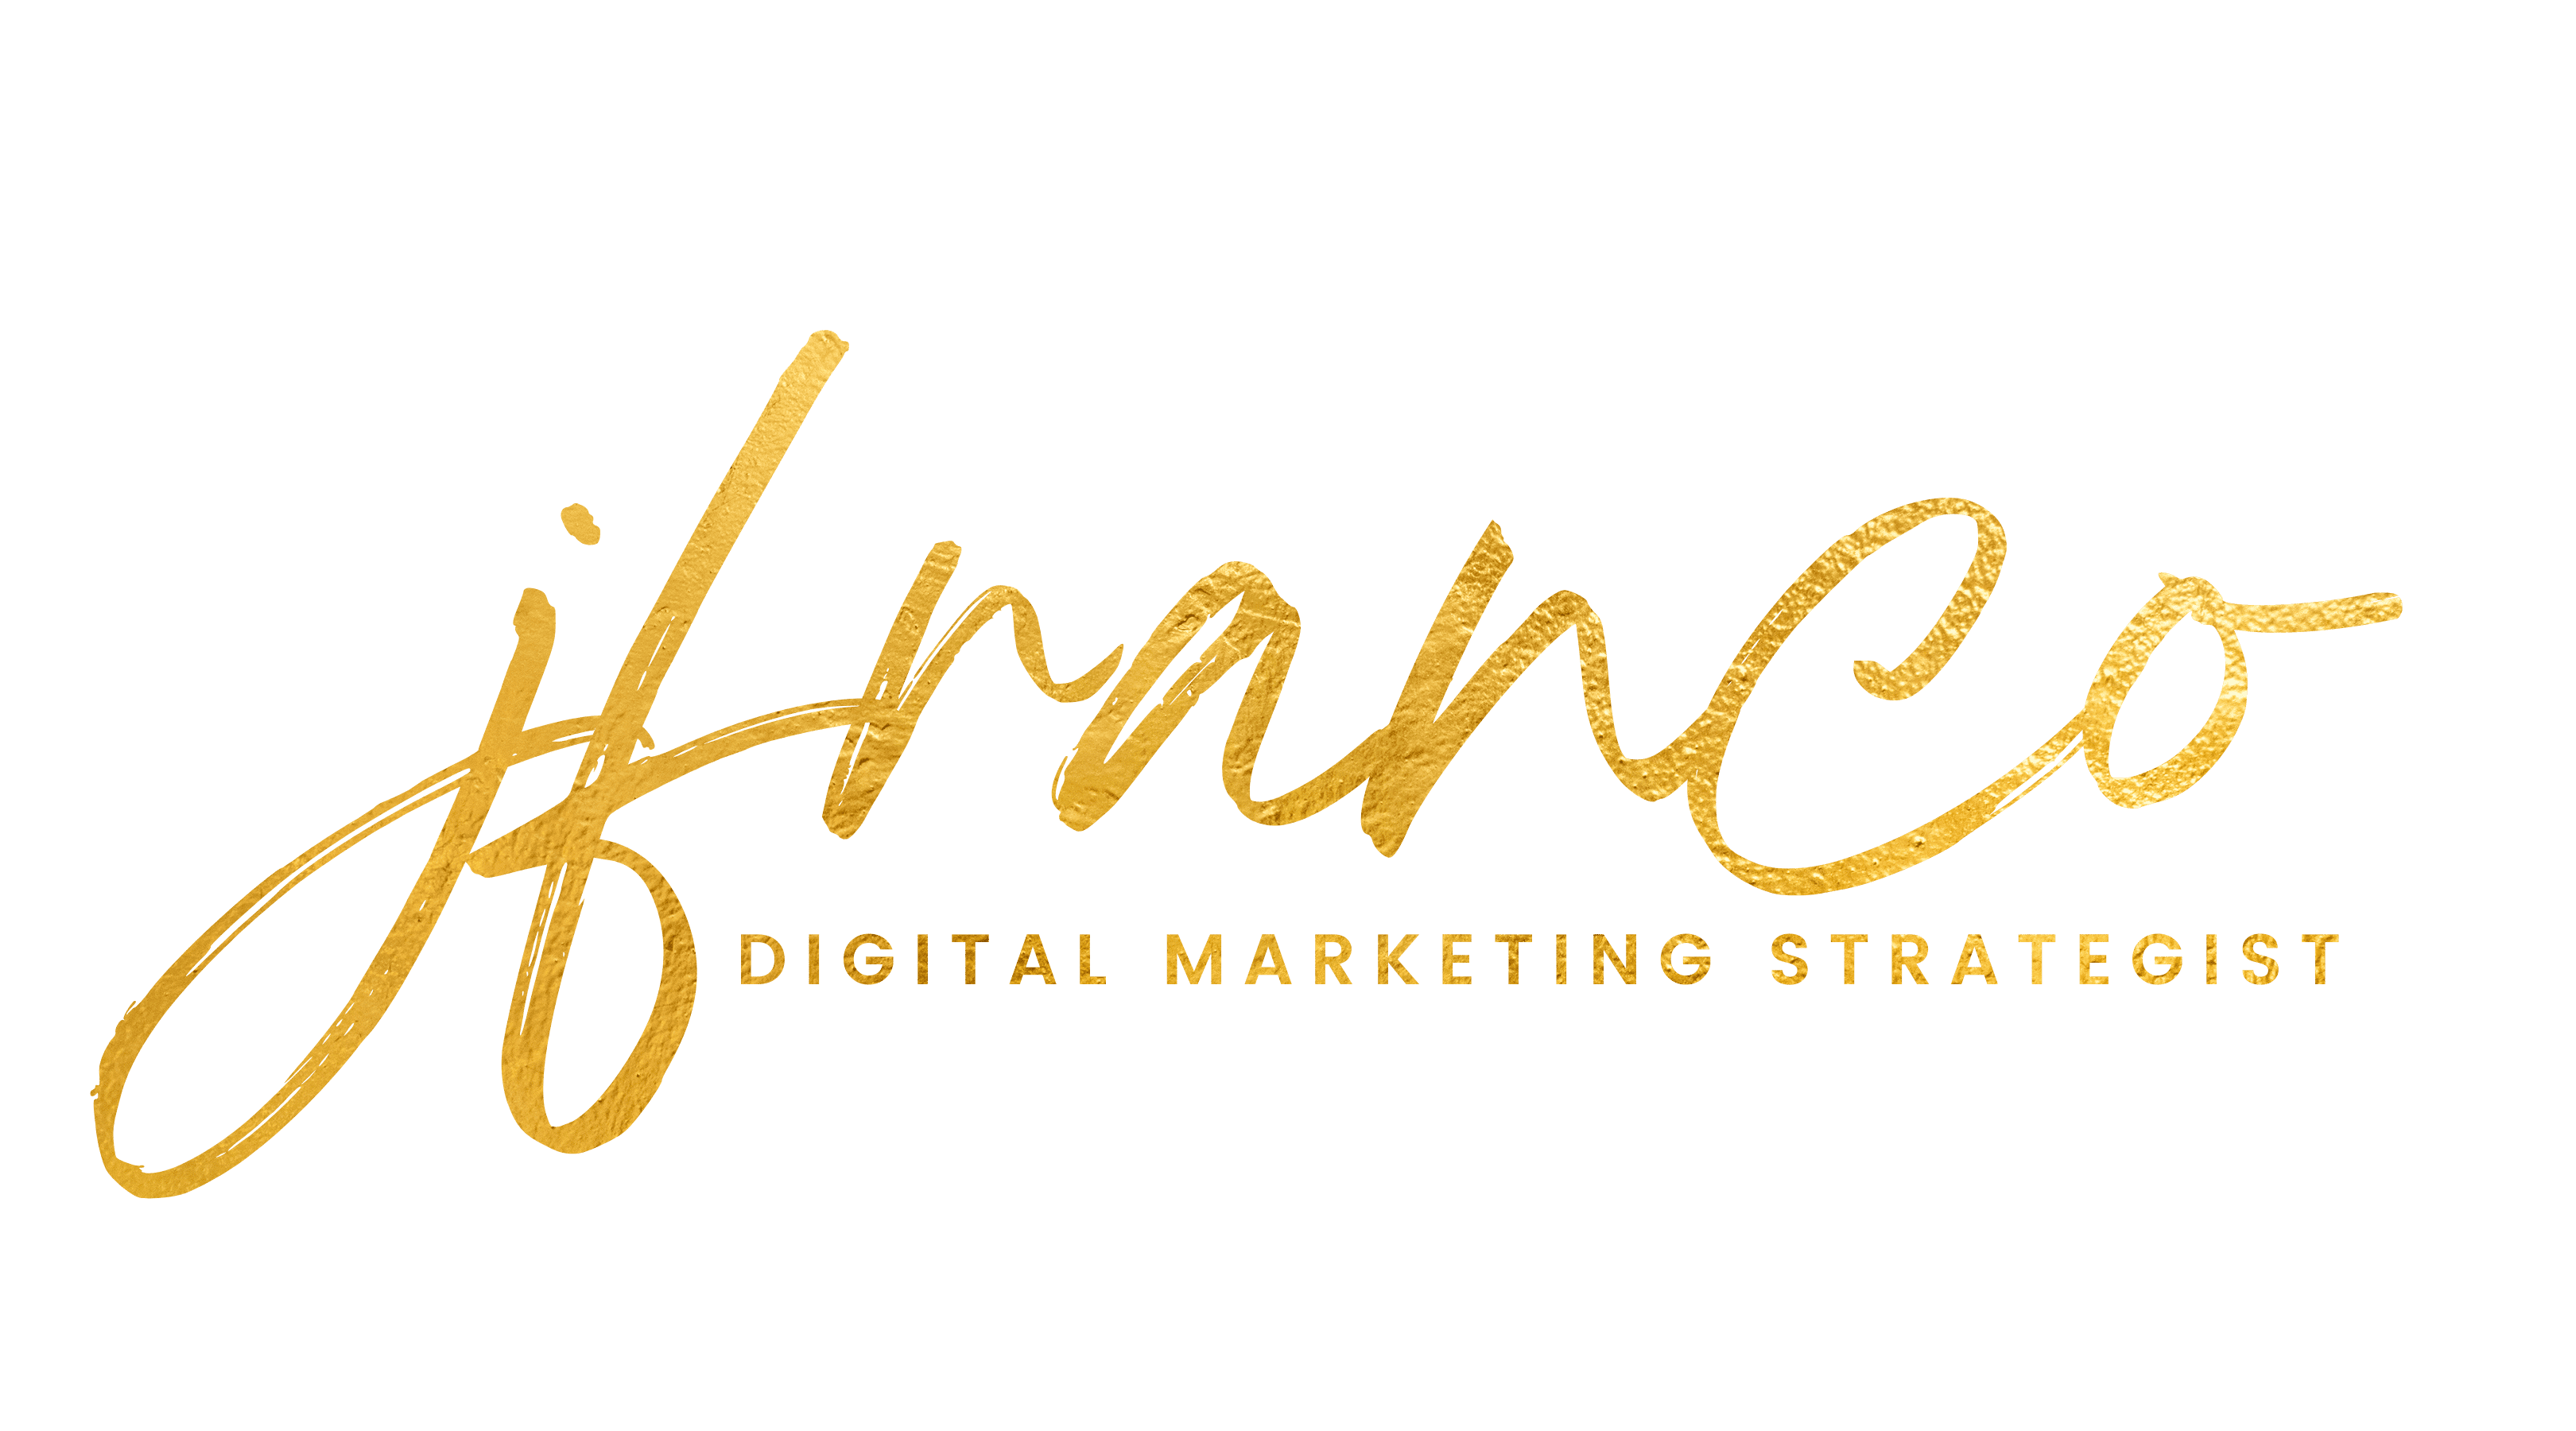 J Franco Marketing Strategist